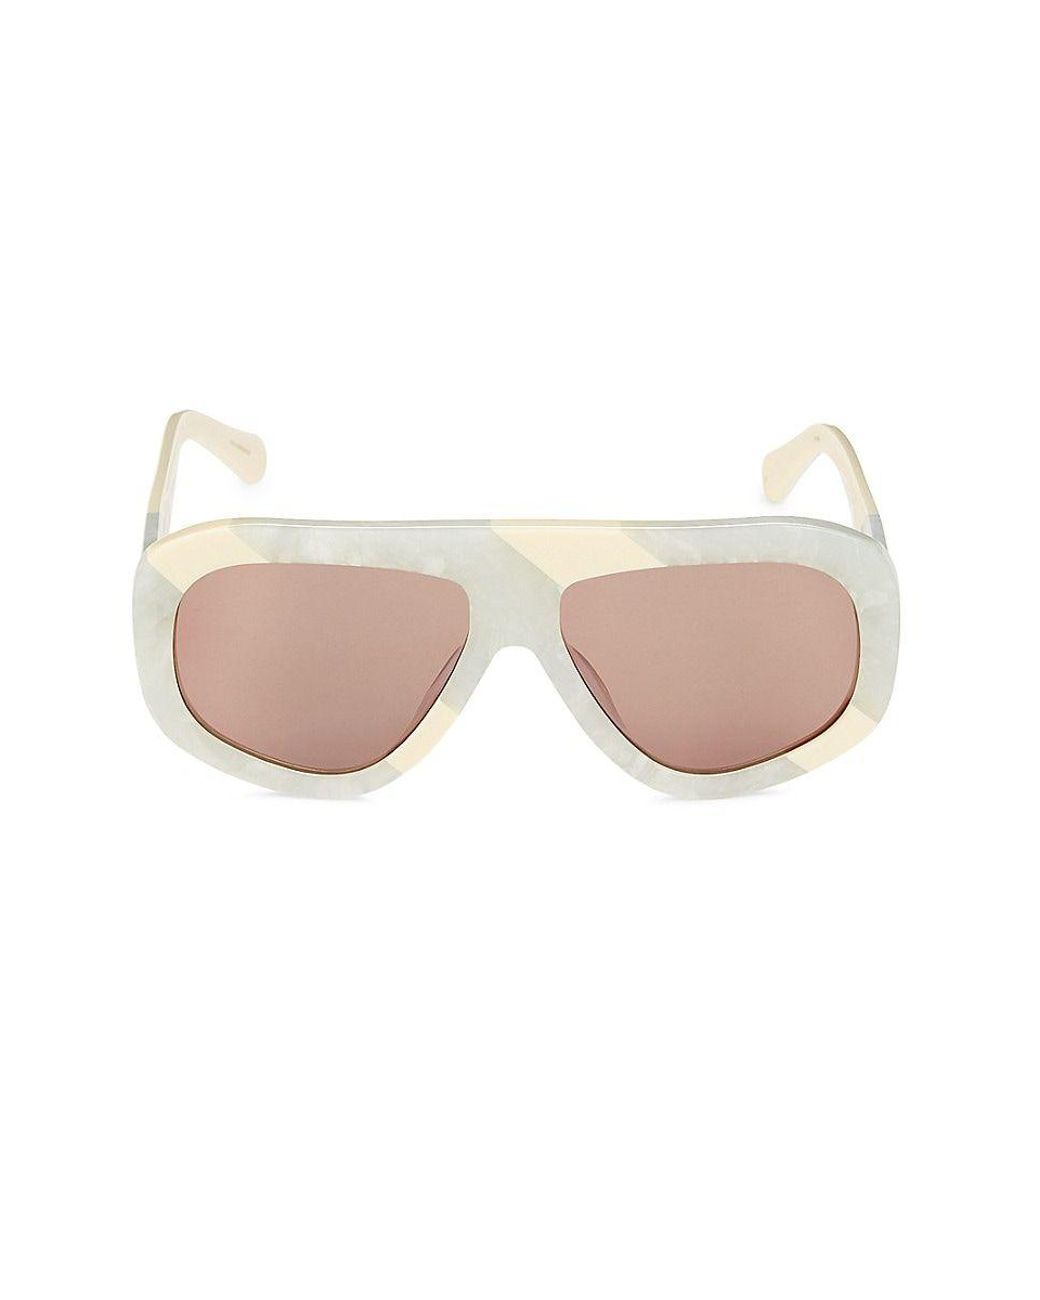 Karen Walker Centurion 58mm Square Sunglasses in Pink | Lyst